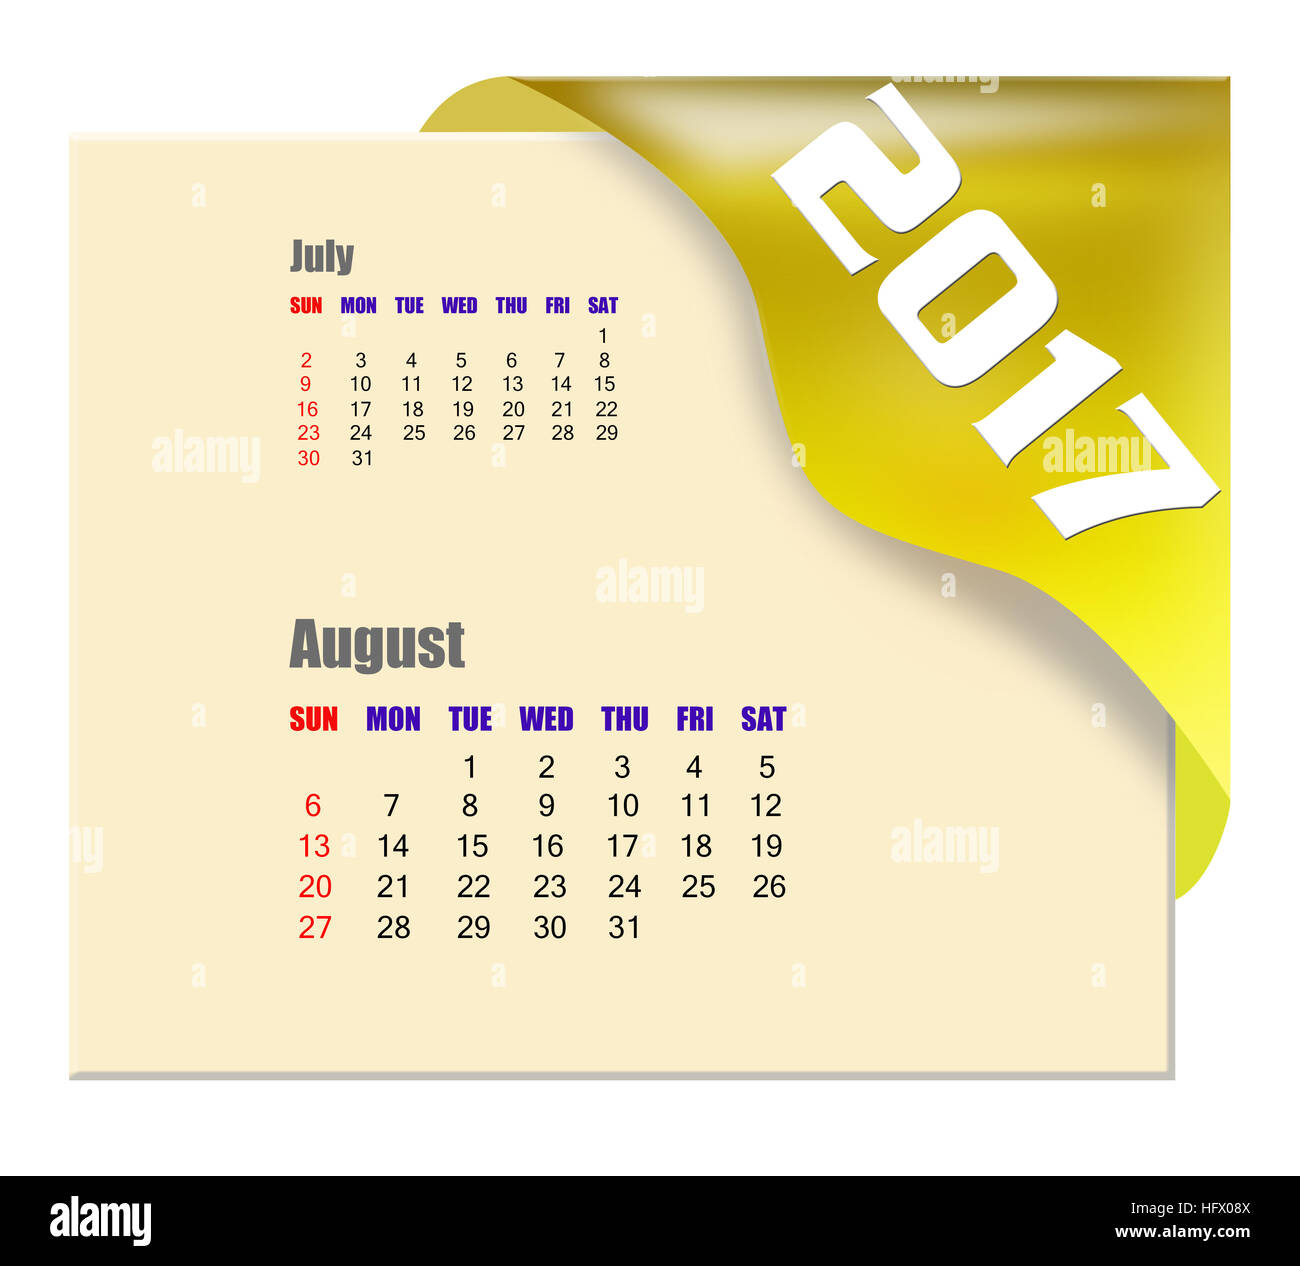 2017-august-calendar-stock-photo-alamy